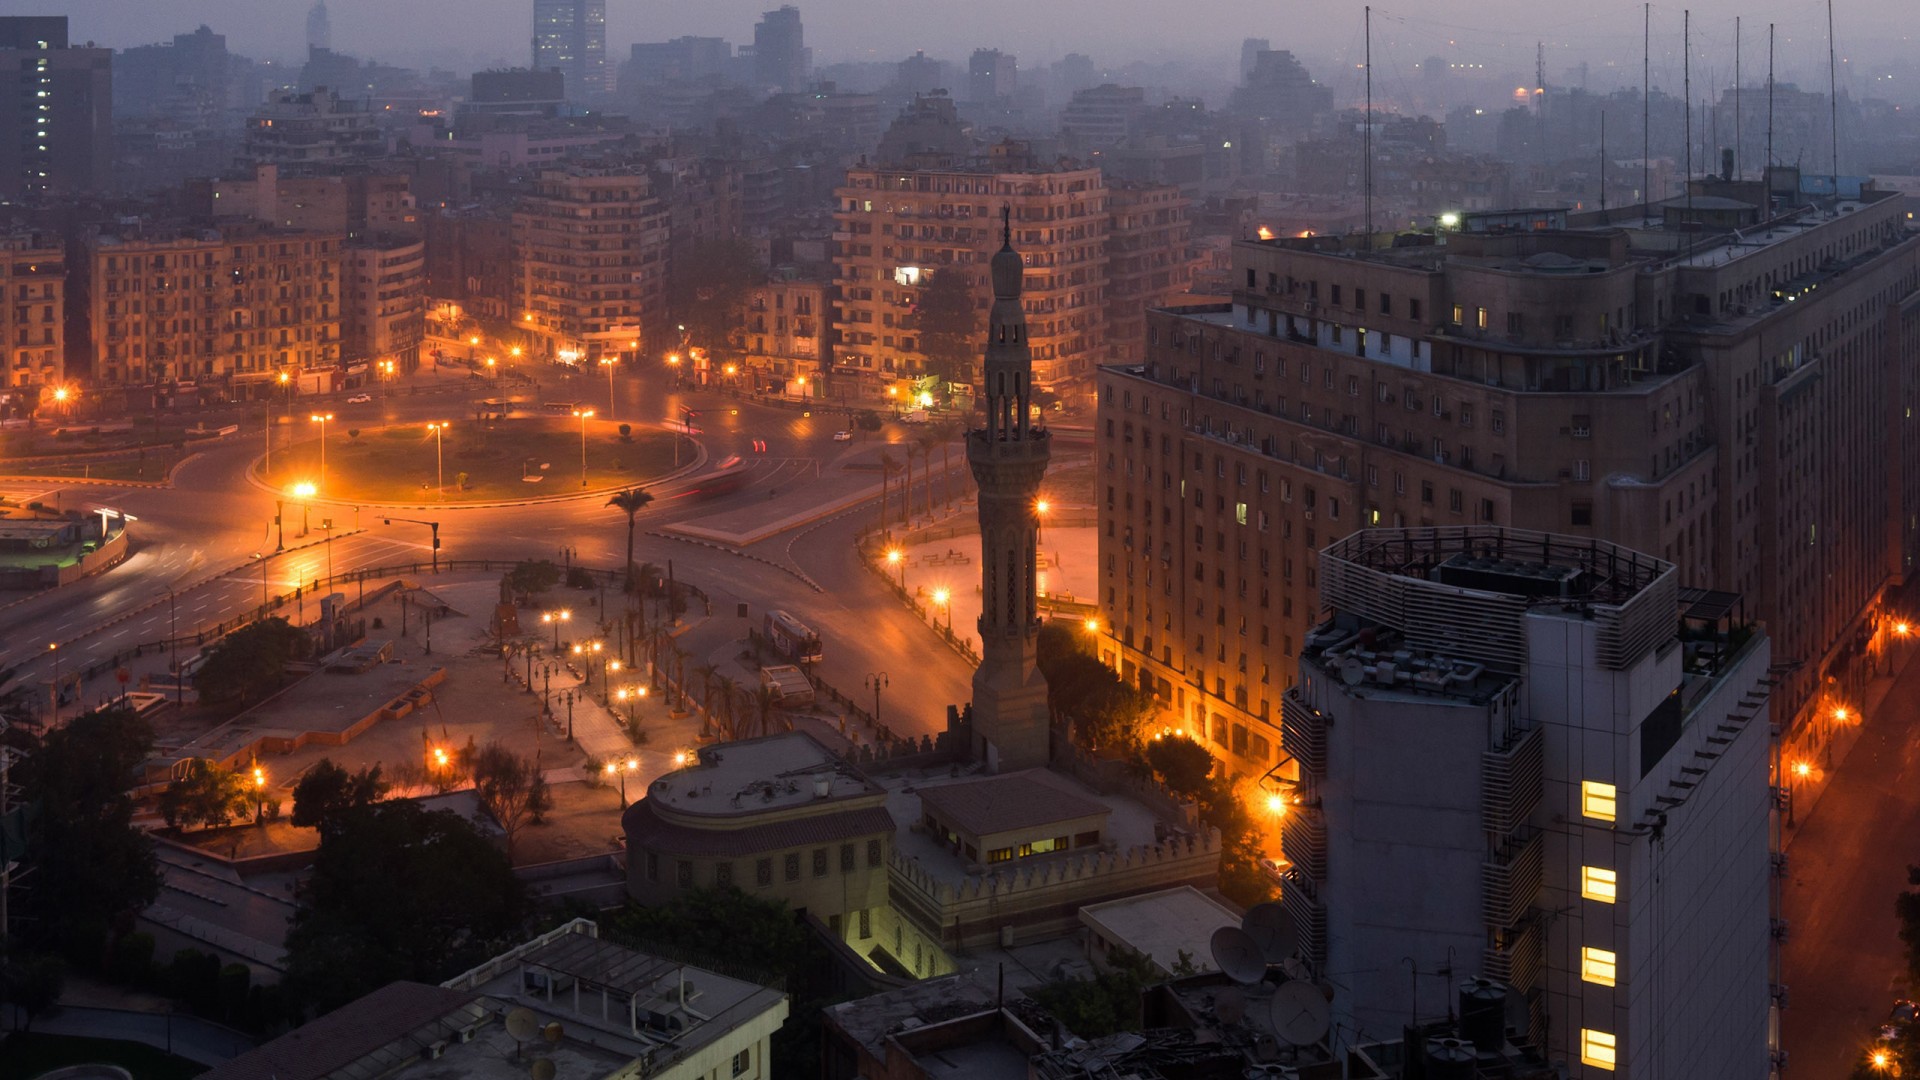 Площадь Тахрир в Каире